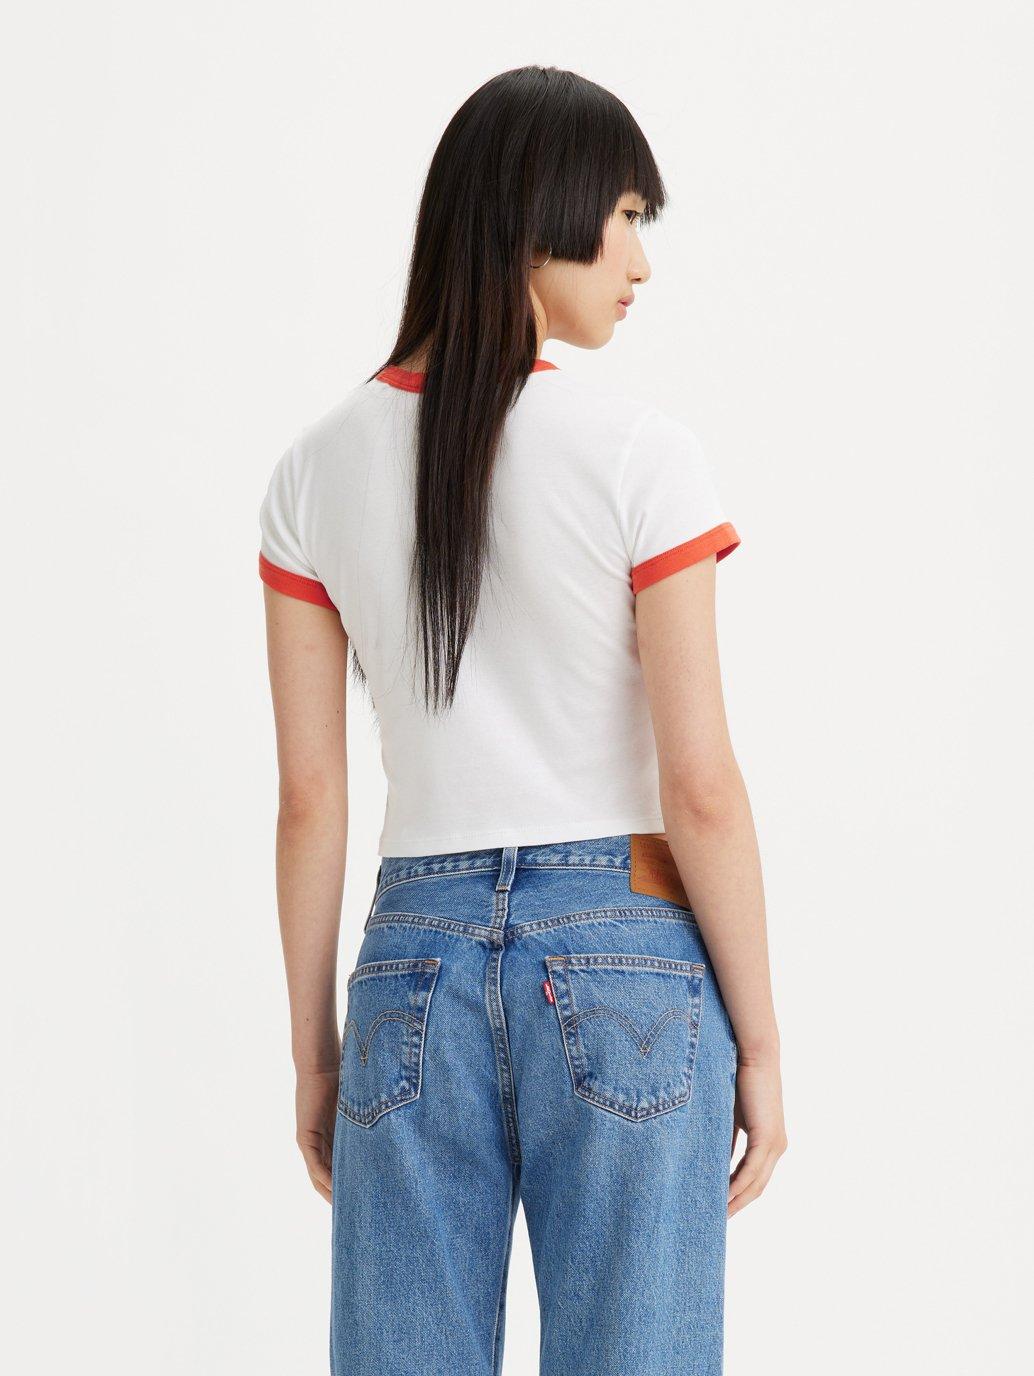 Buy Levi's® Women's Graphic Ringer Mini T-Shirt| Levi's® Official ...